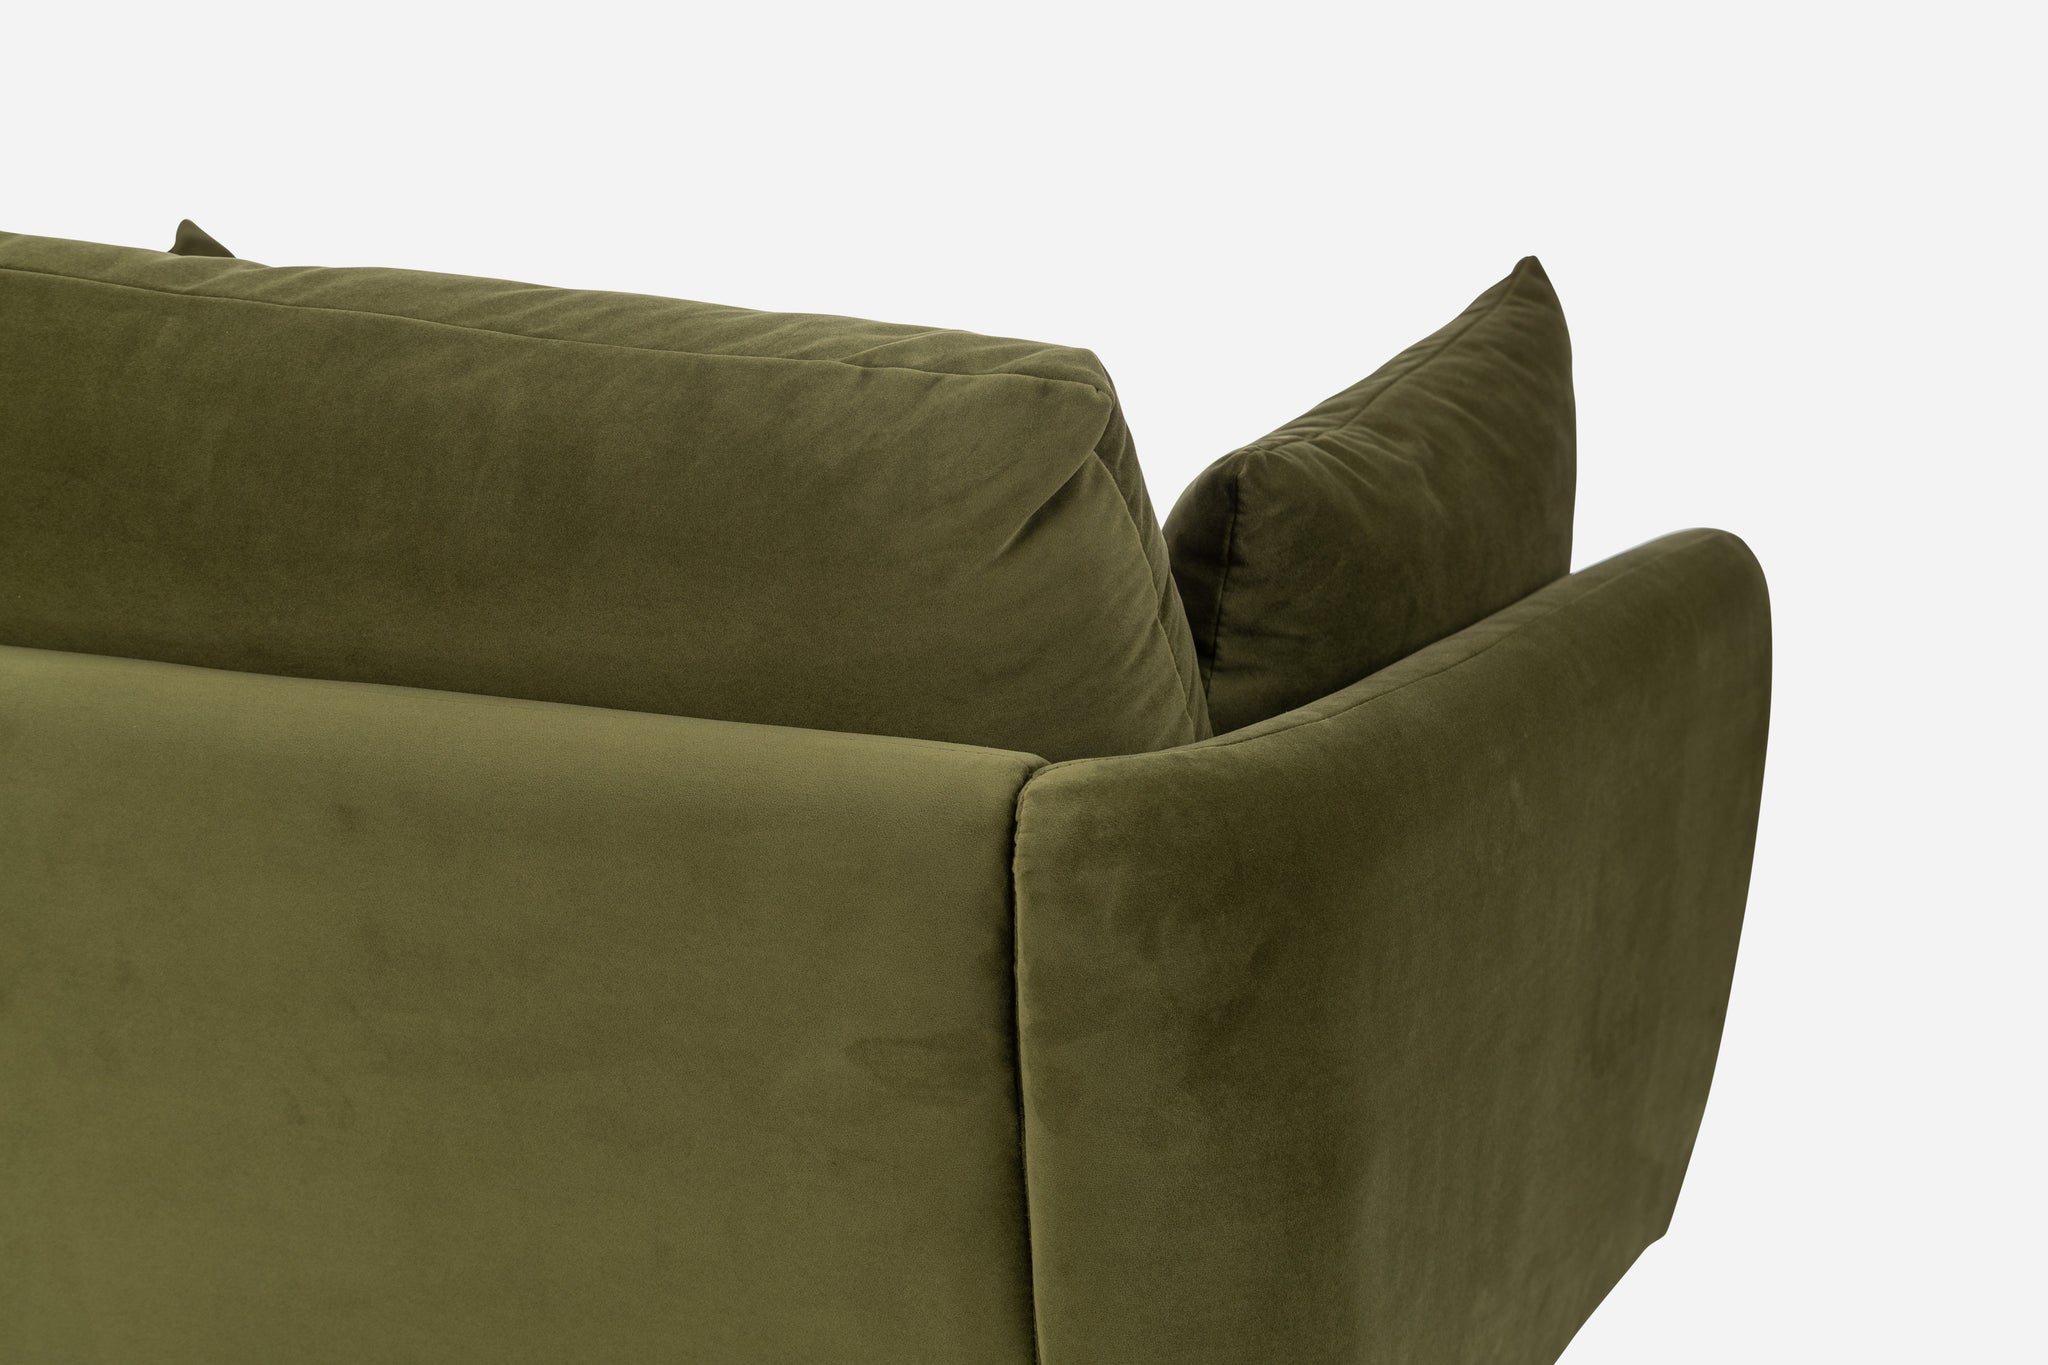 park armchair shown in olive velvet with gold legs